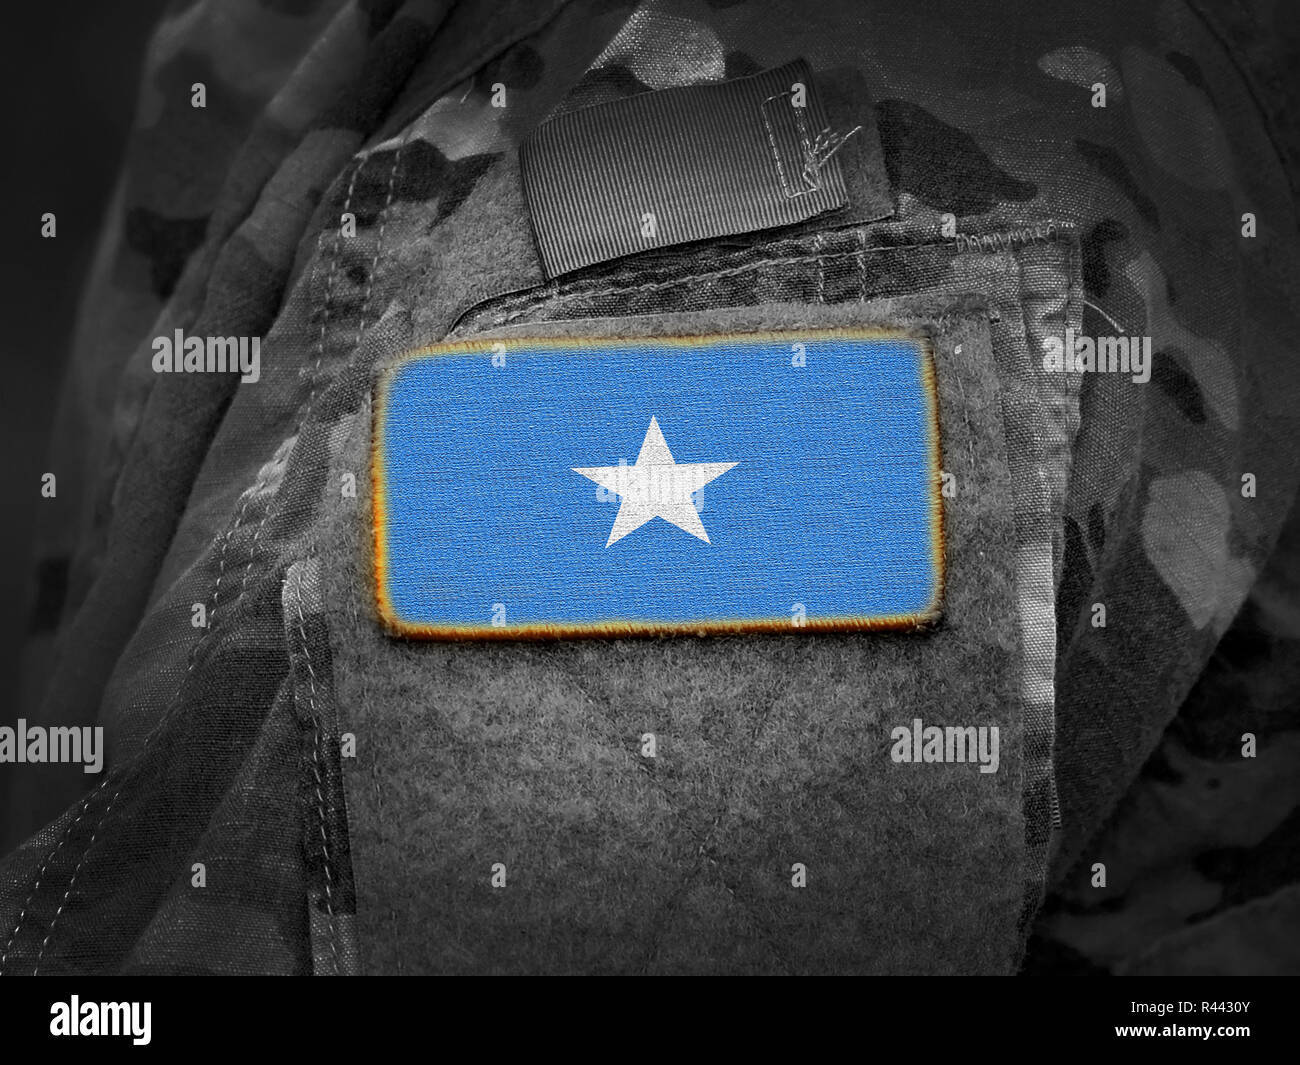 Somalia Flagge Auf Soldaten Arm Collage Stockfotografie Alamy